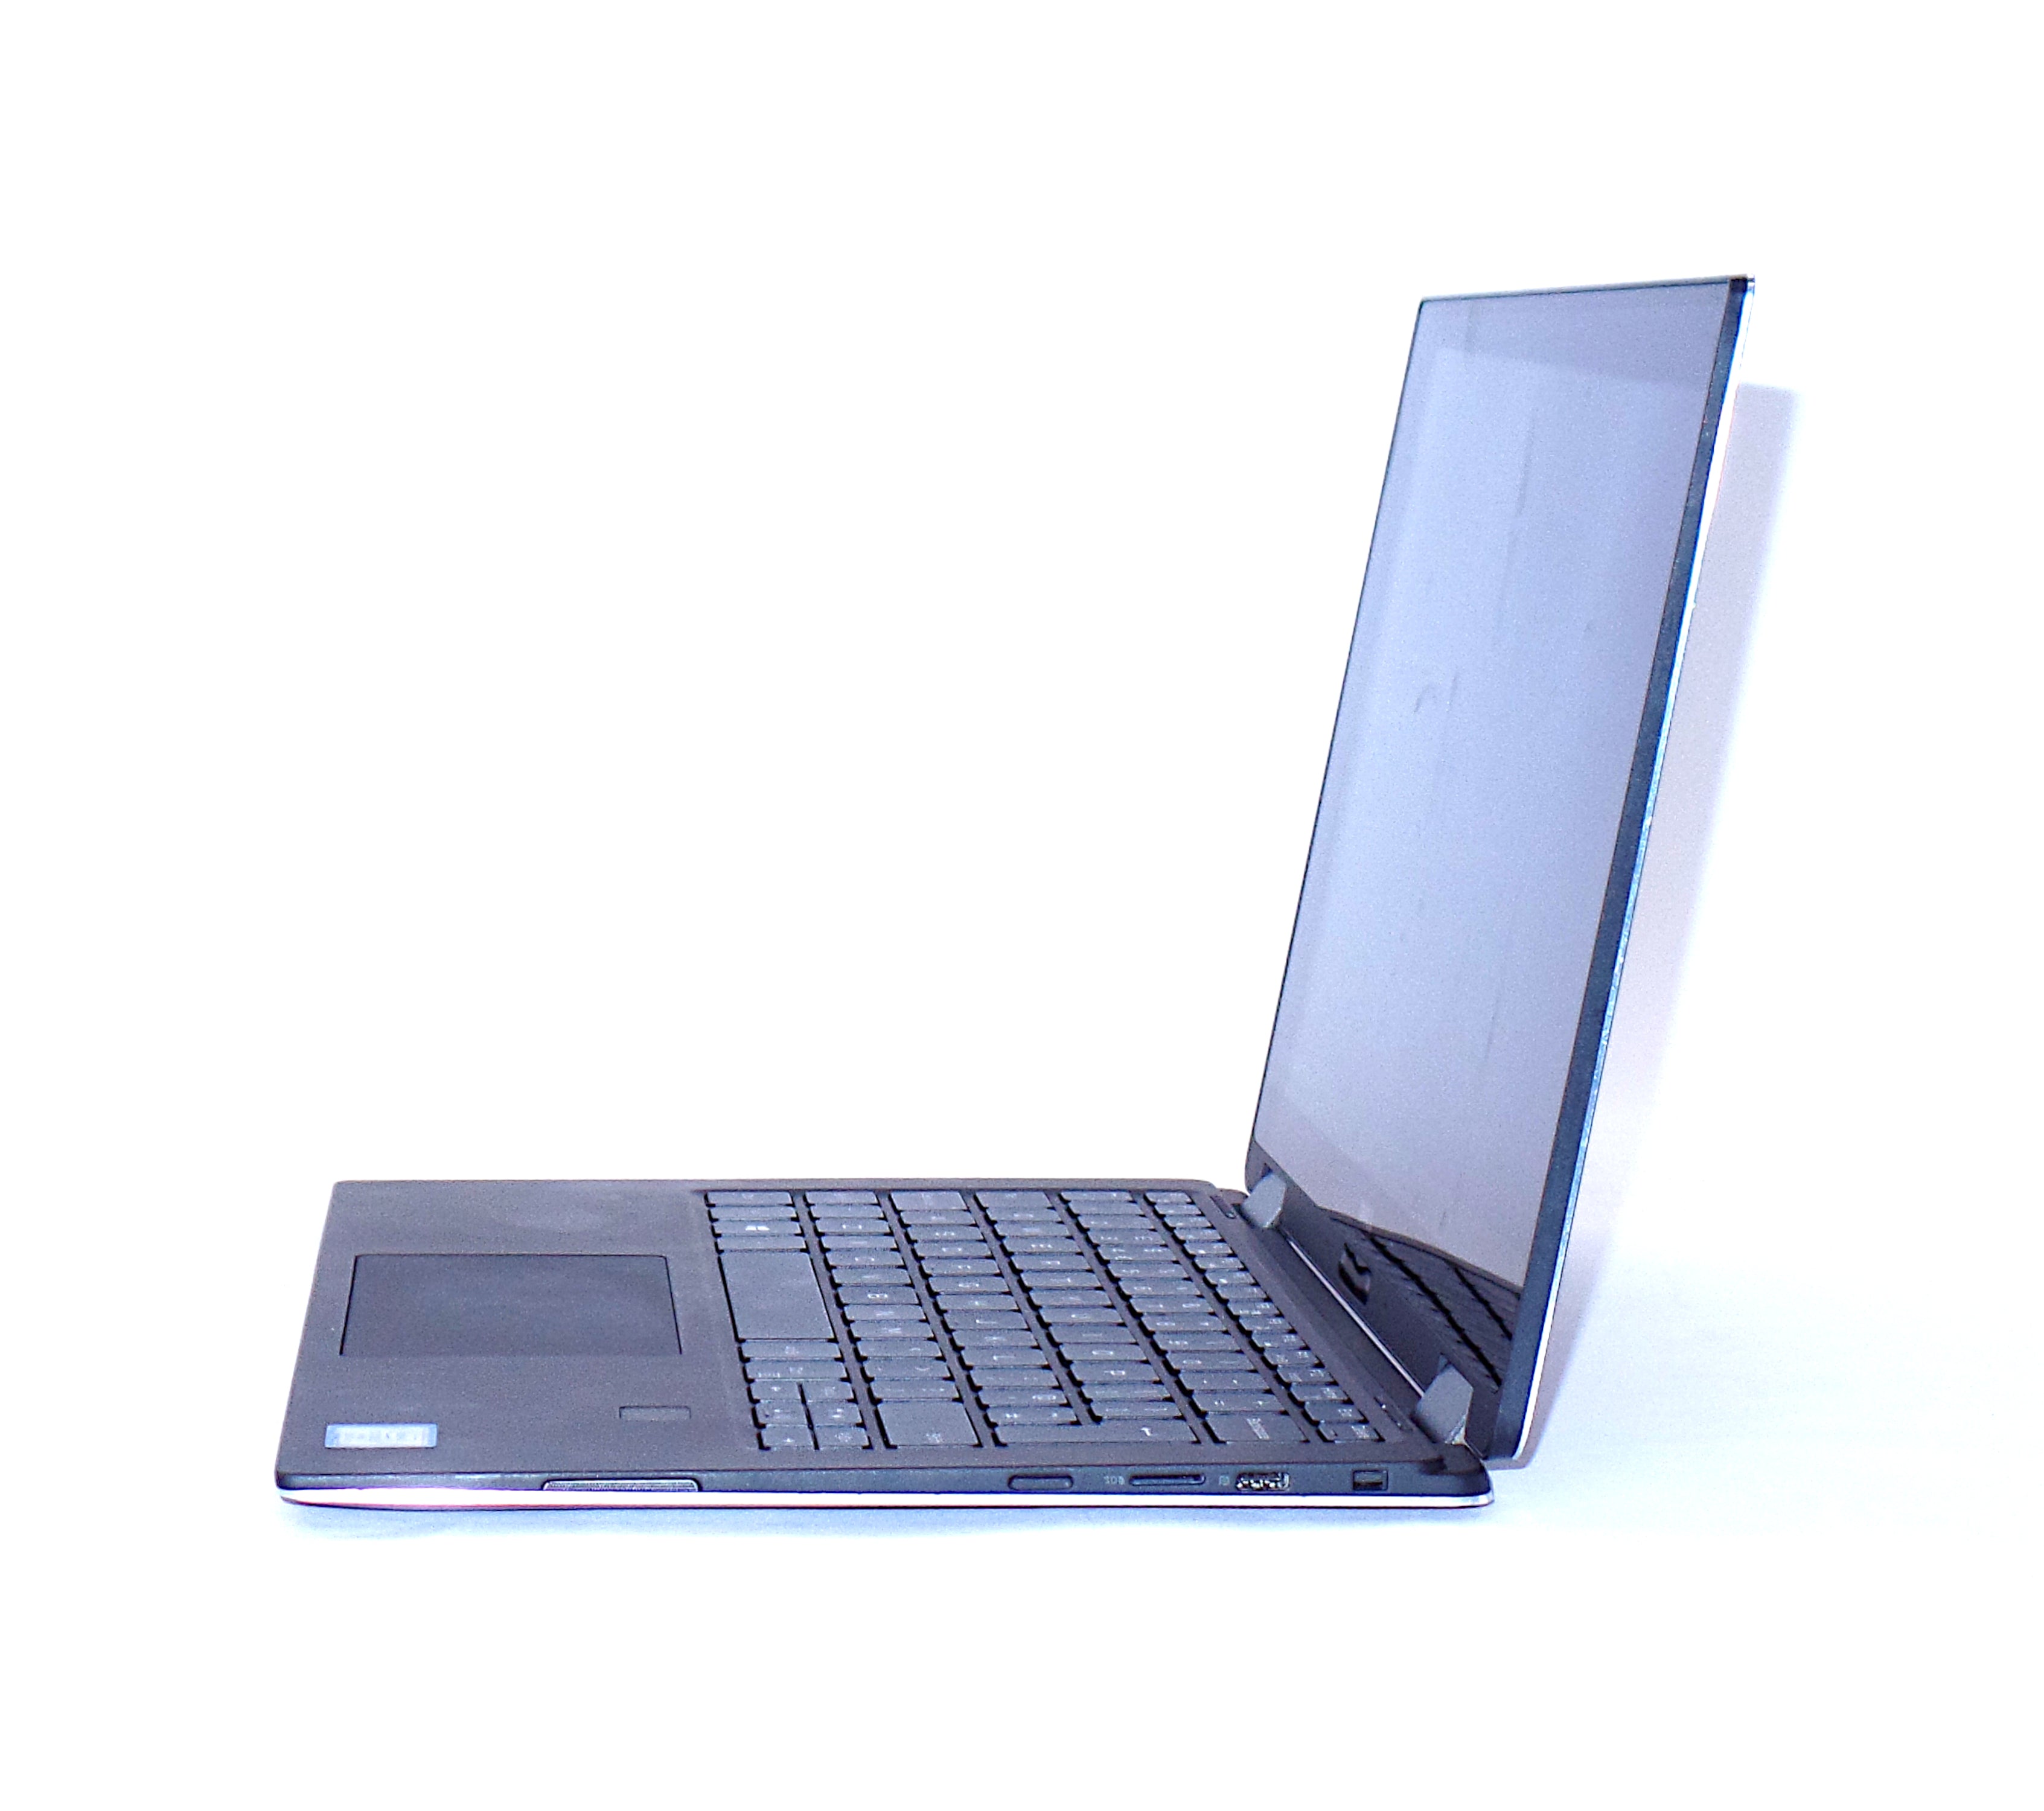 Dell XPS 13 Laptop, 13.3" Intel Core i7, 16GB RAM, 256GB SSD